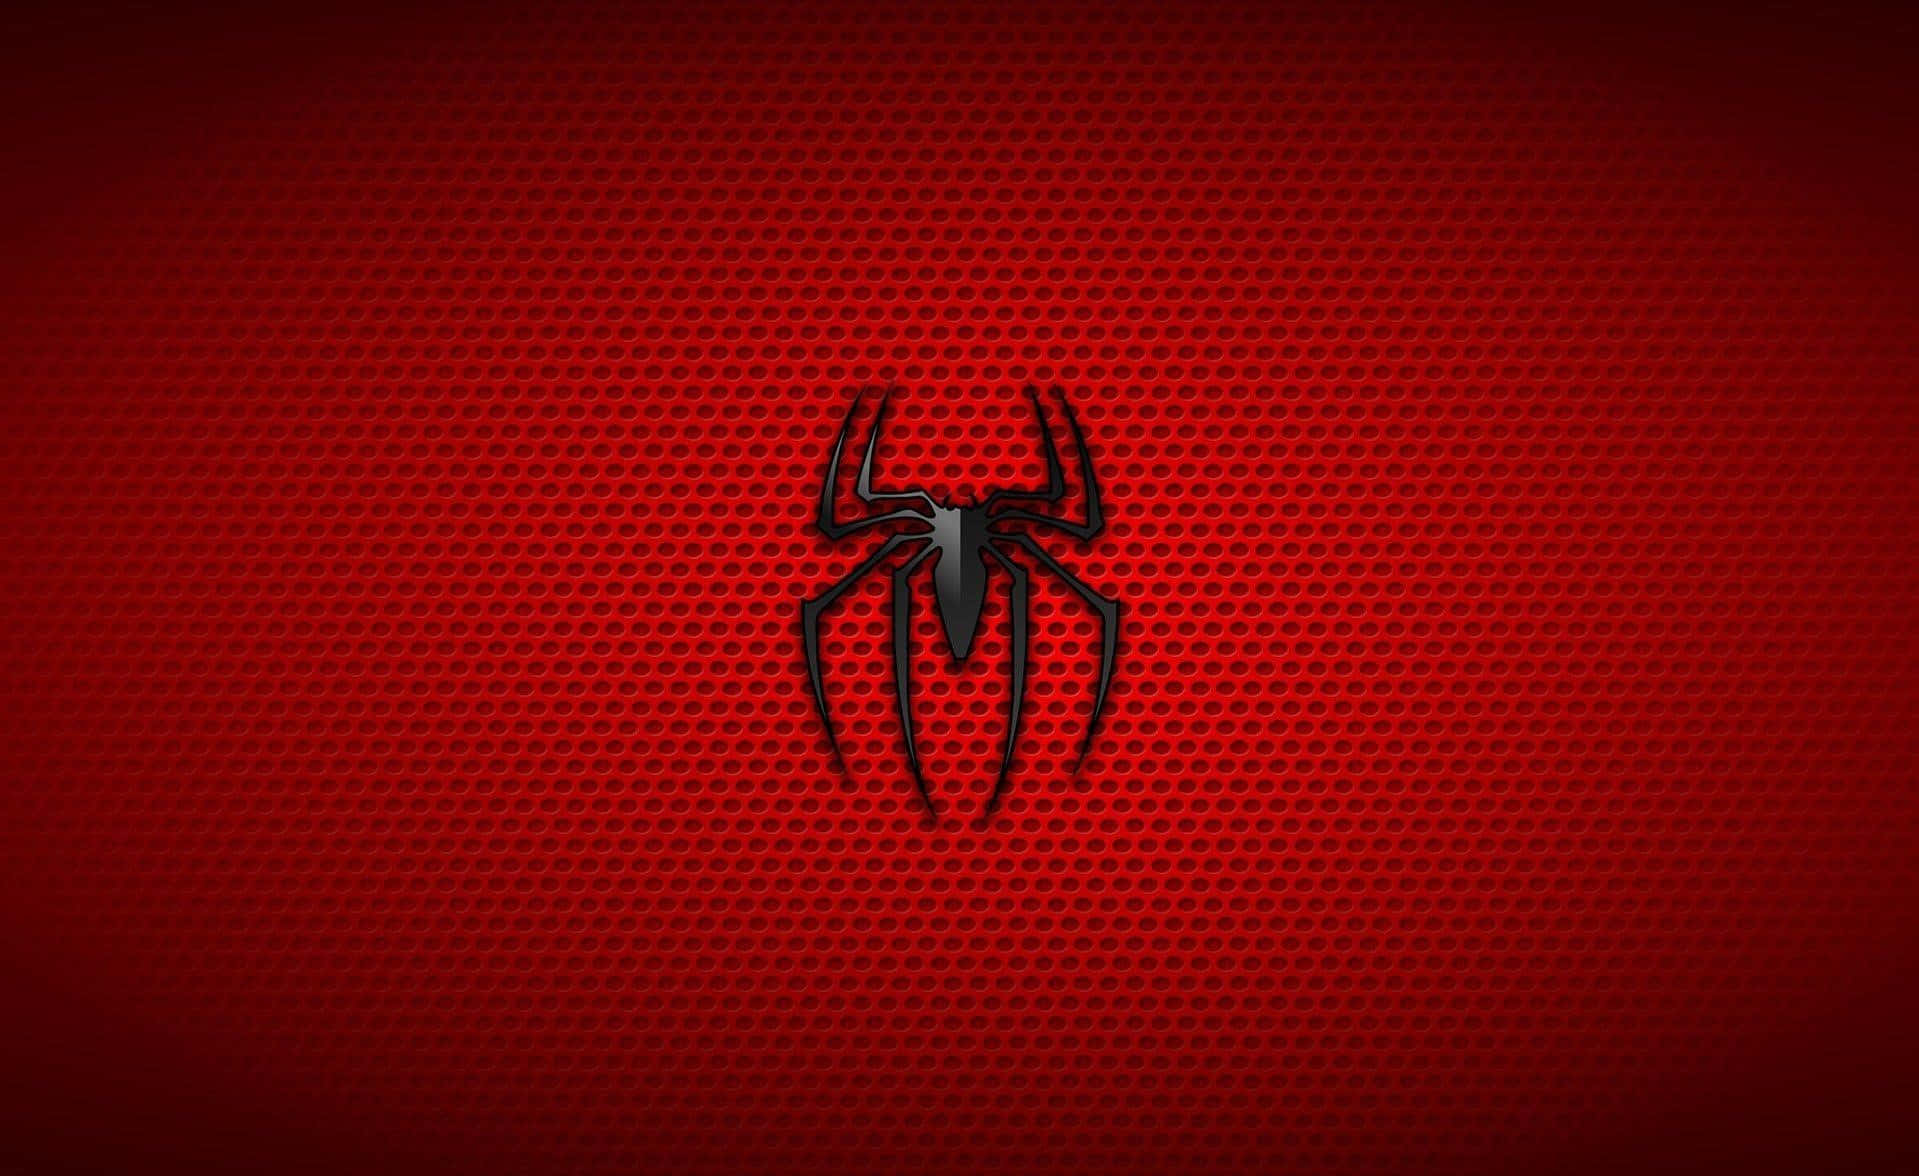 Spider Man Logo On Red Background Wallpaper